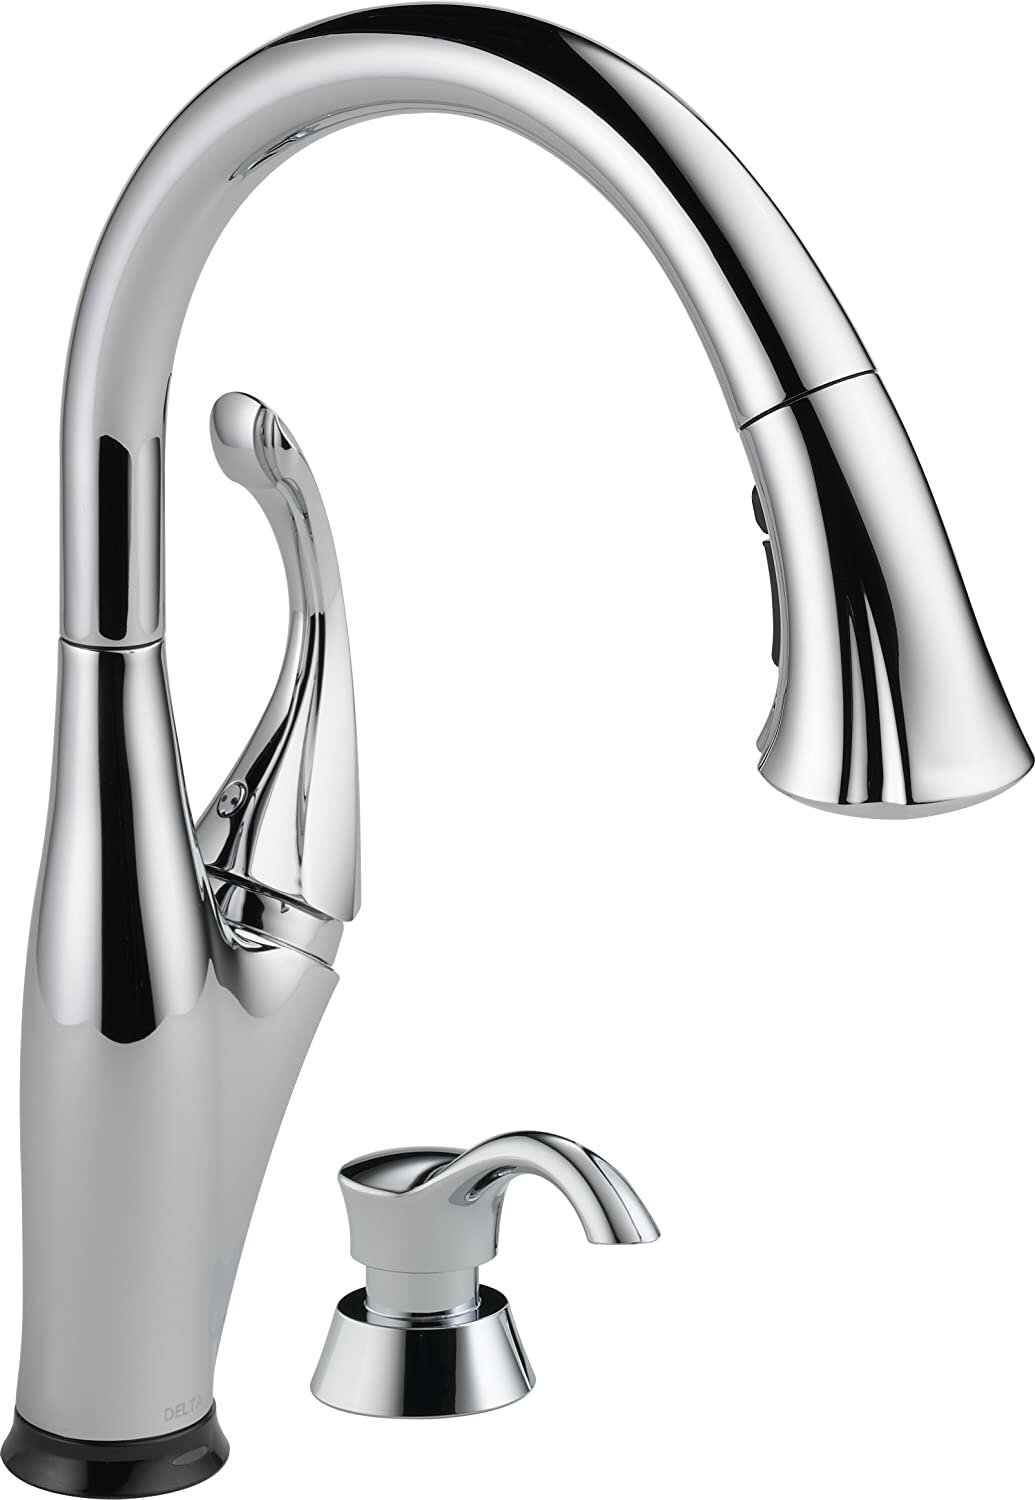 Смеситель для кухонной раковины Delta Addison 1-handle Kitchen Faucet Pull Down Spray Touch2o Chrome 9192t-dst / Model #:D9192TDST